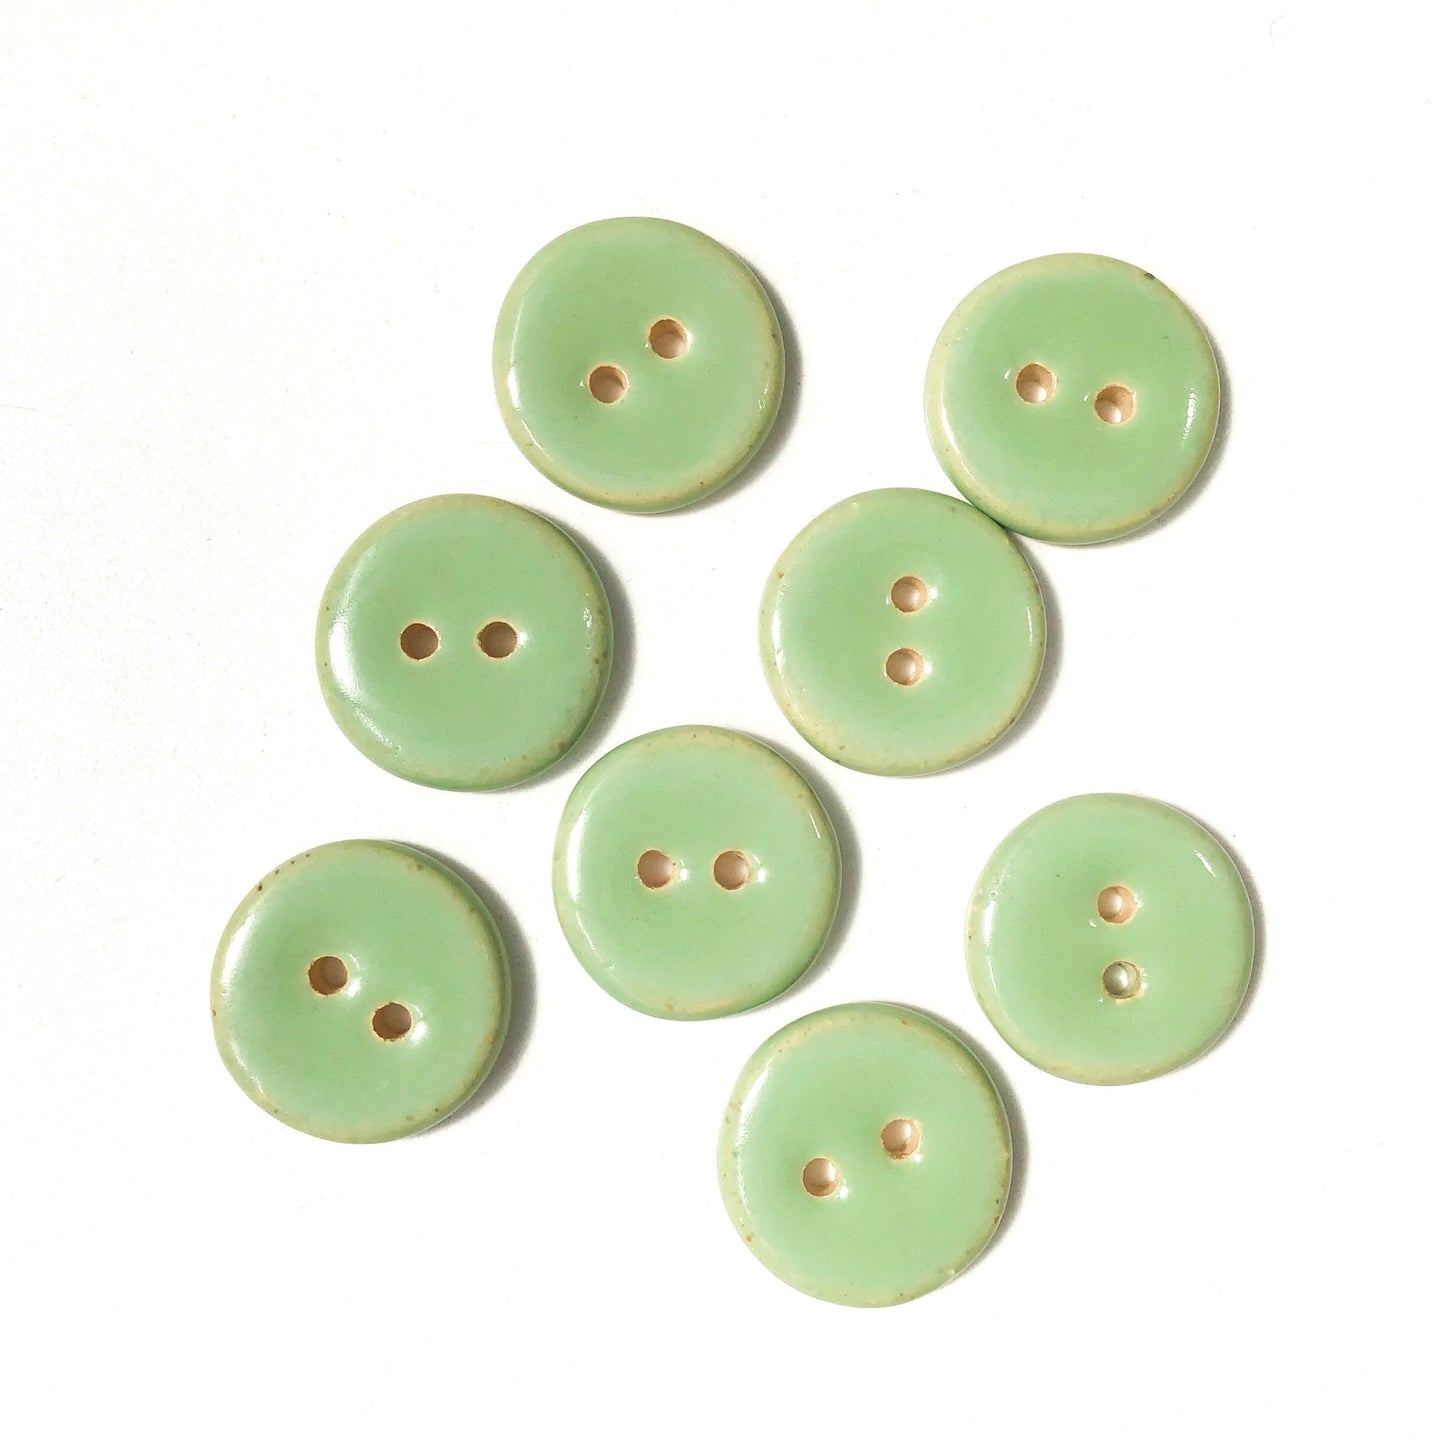 Mint Green Ceramic Buttons - Light Green Clay Buttons - 3/4" - 8 Pack